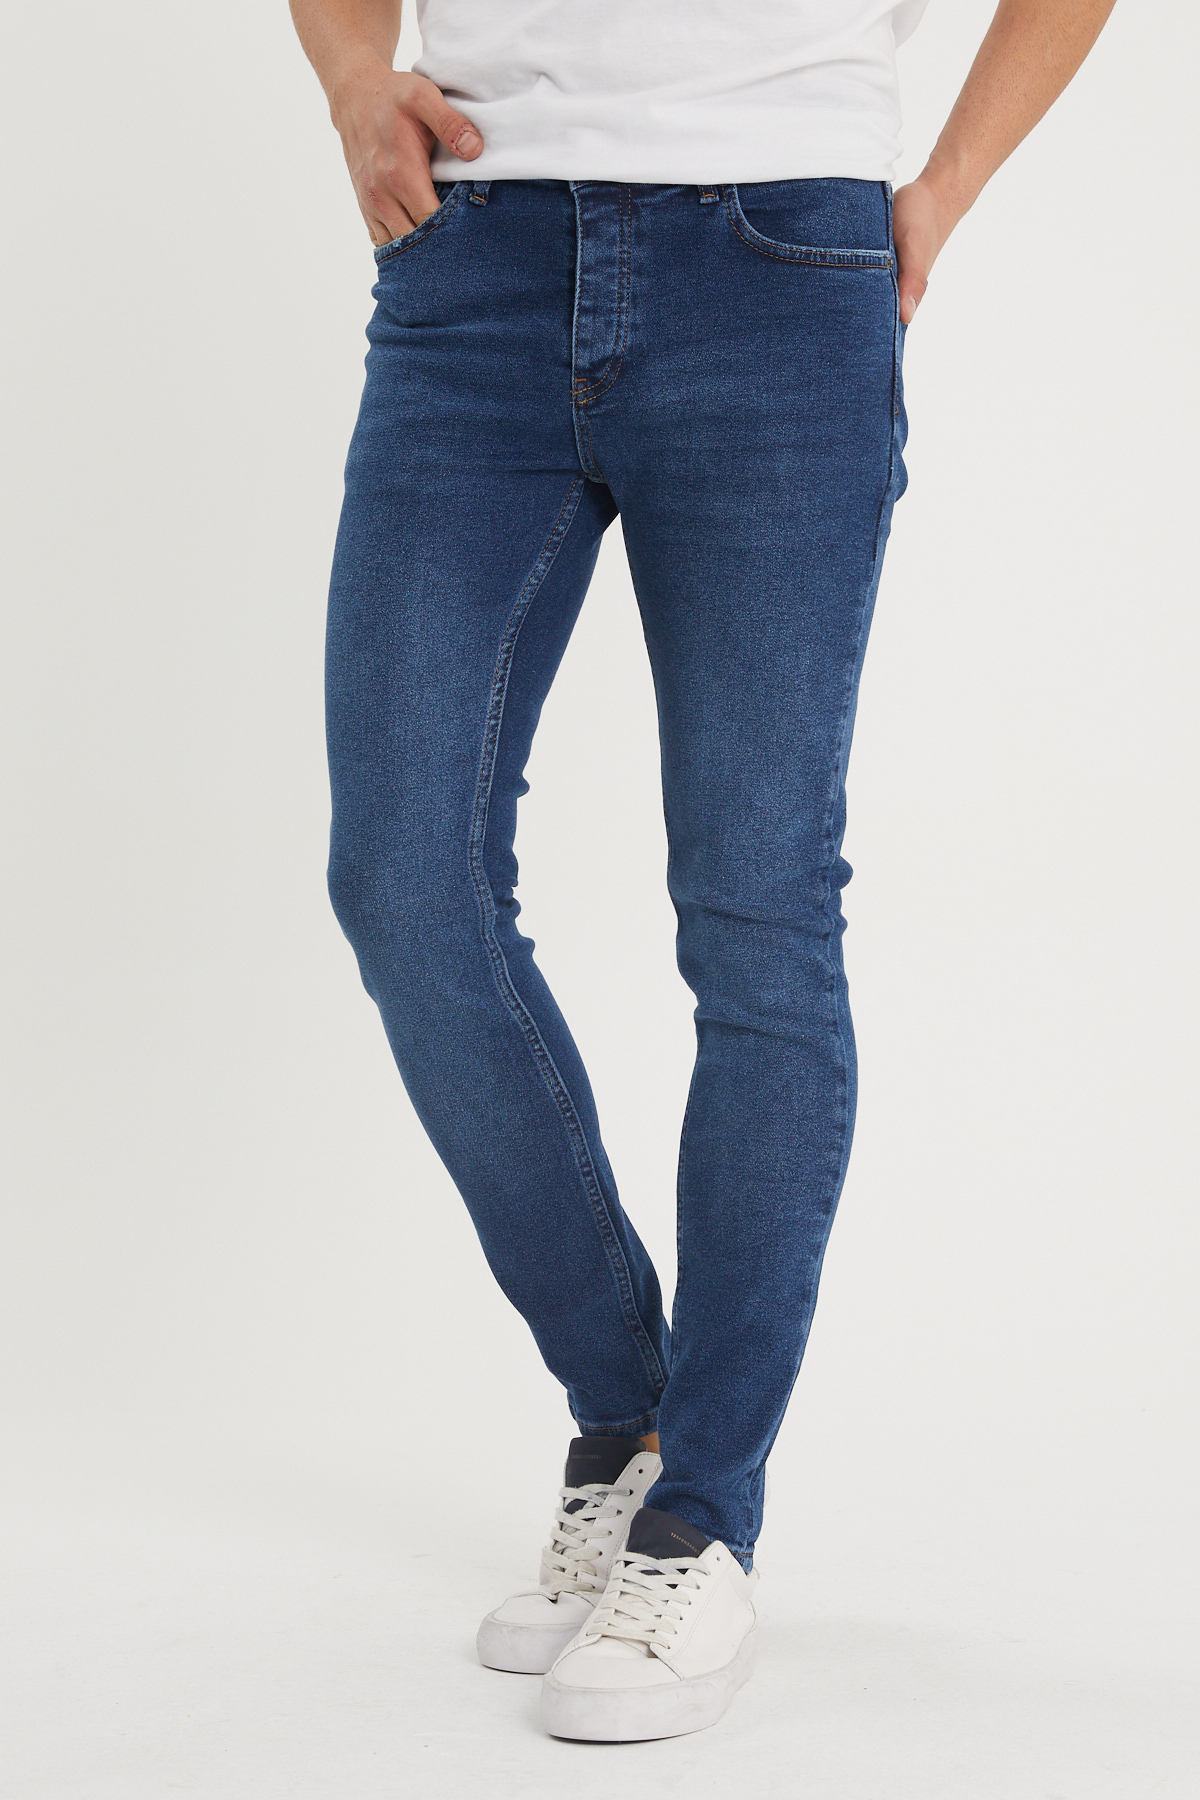 Lacivert Slim Fit Jean Pantolon 1KXE5-44351-14 - 1